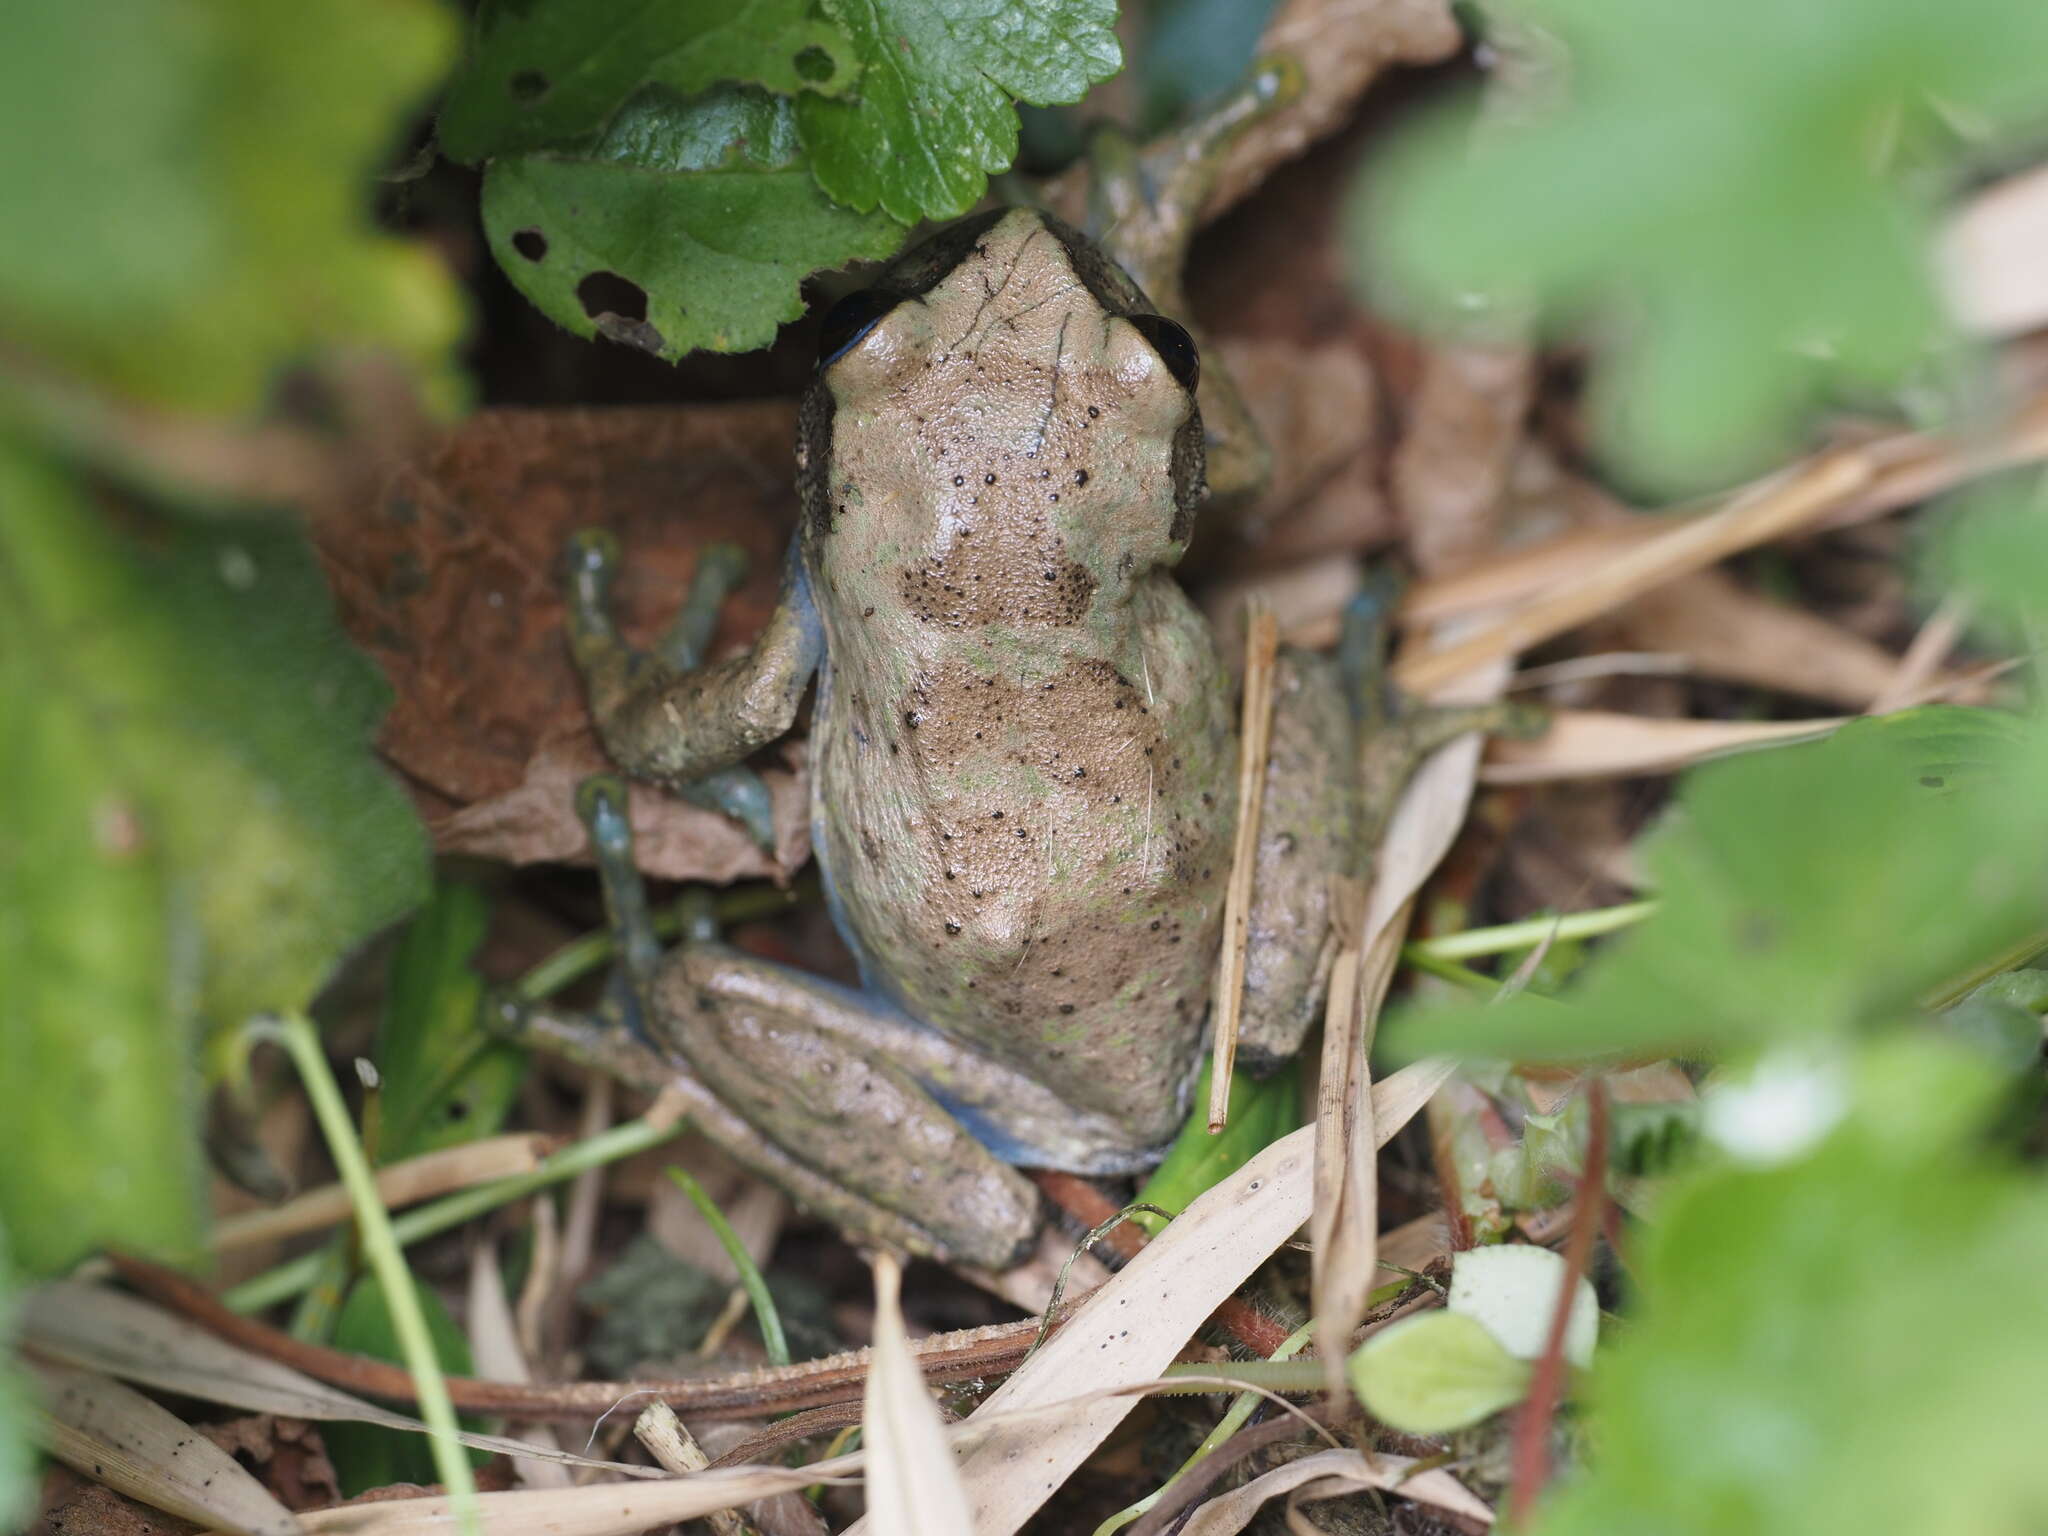 Image of Kivu tree frog